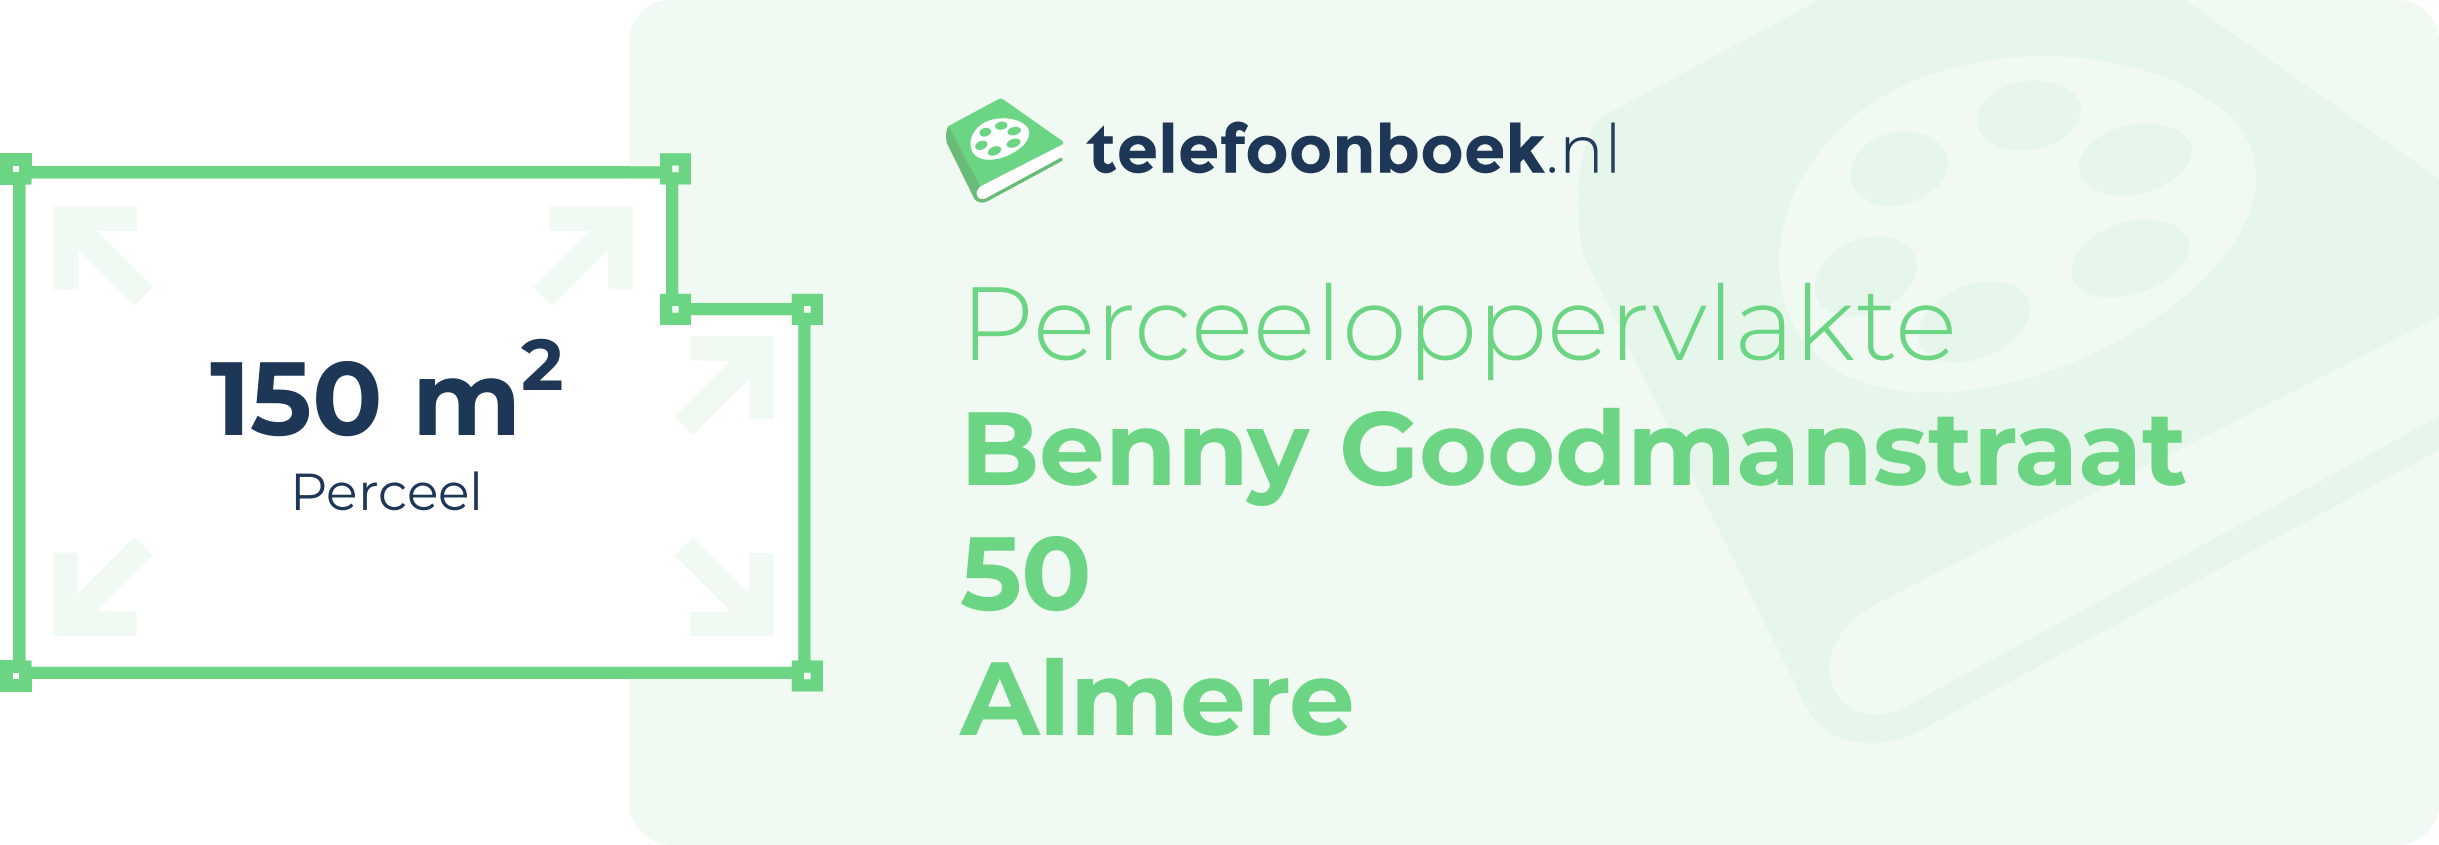 Perceeloppervlakte Benny Goodmanstraat 50 Almere